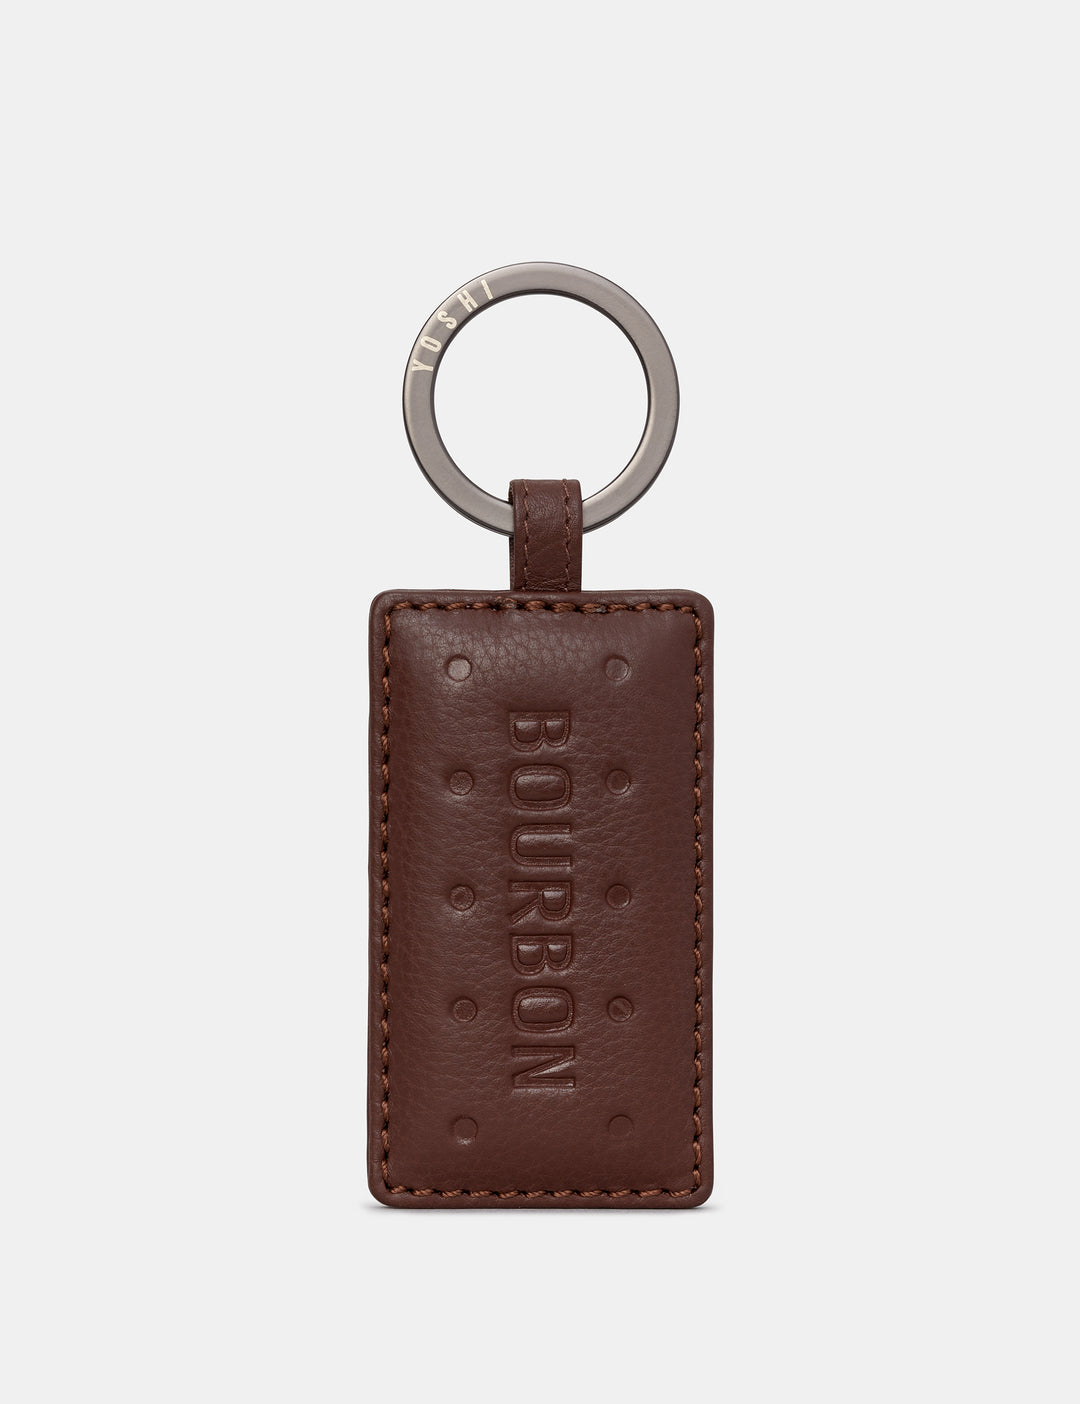 yoshi bourbon leather key ring £9 plus post in stock